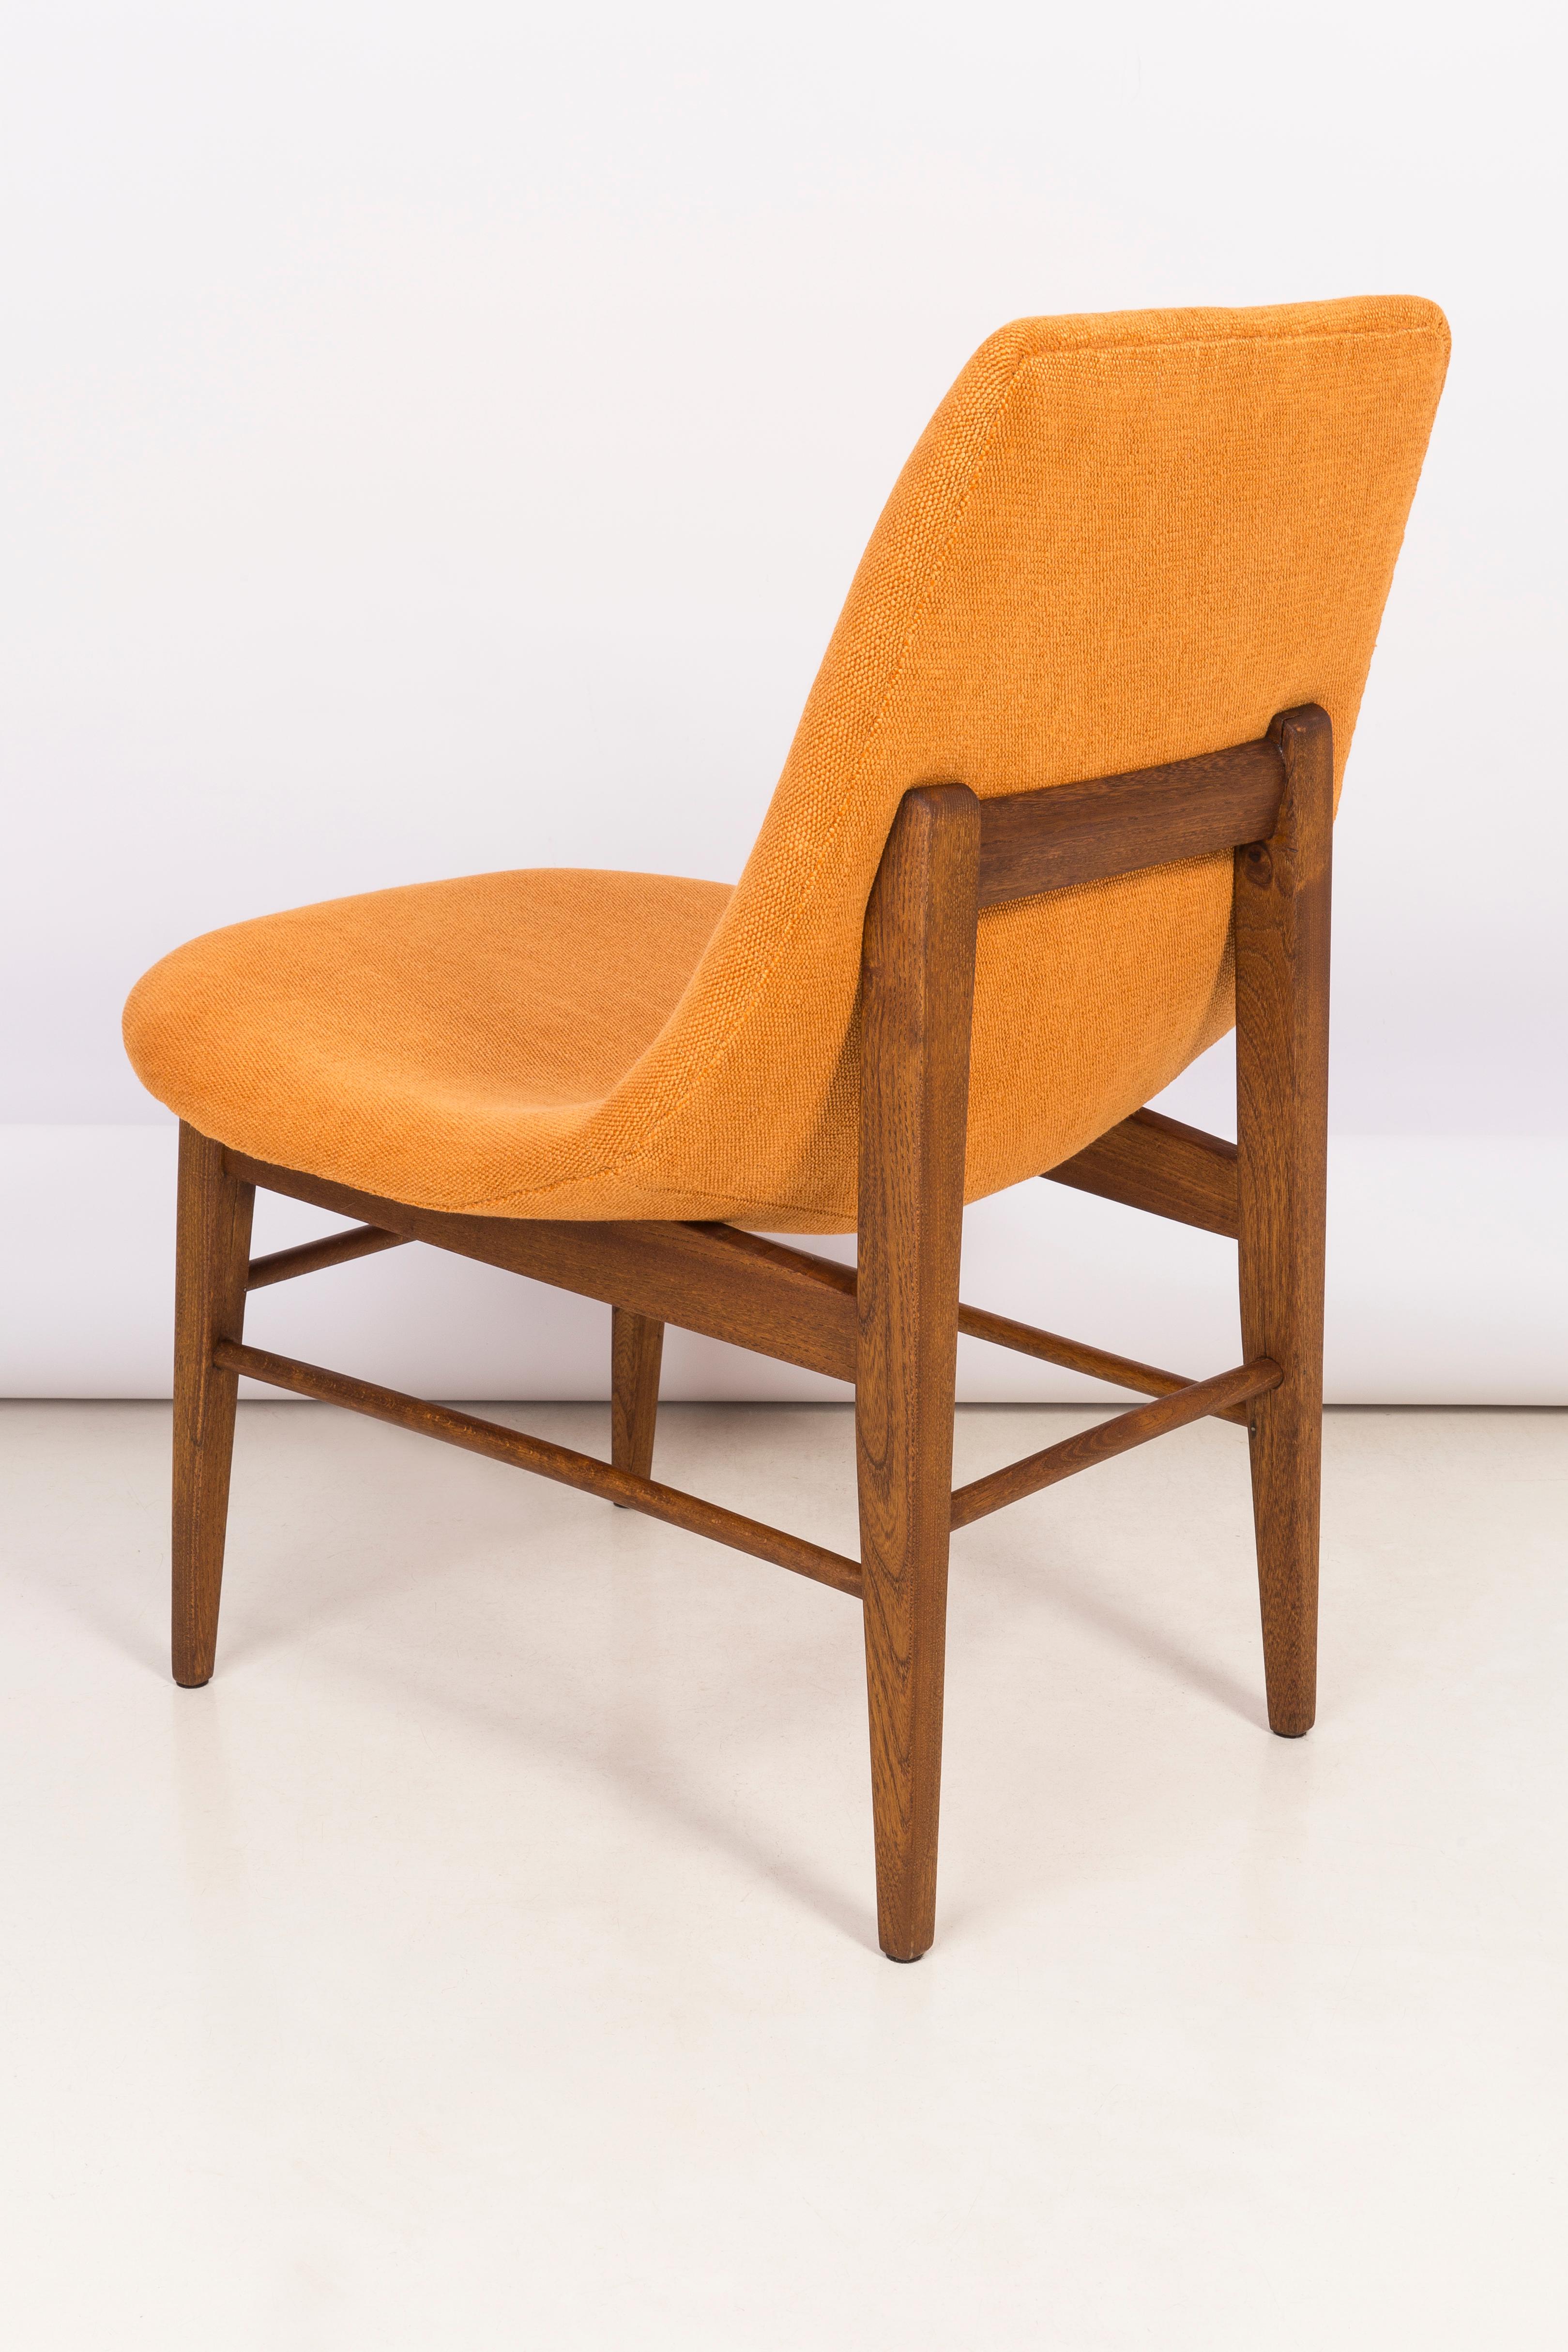 Rare 20th Century Orange Shell Chair, H.Lachert, 1960s For Sale 4